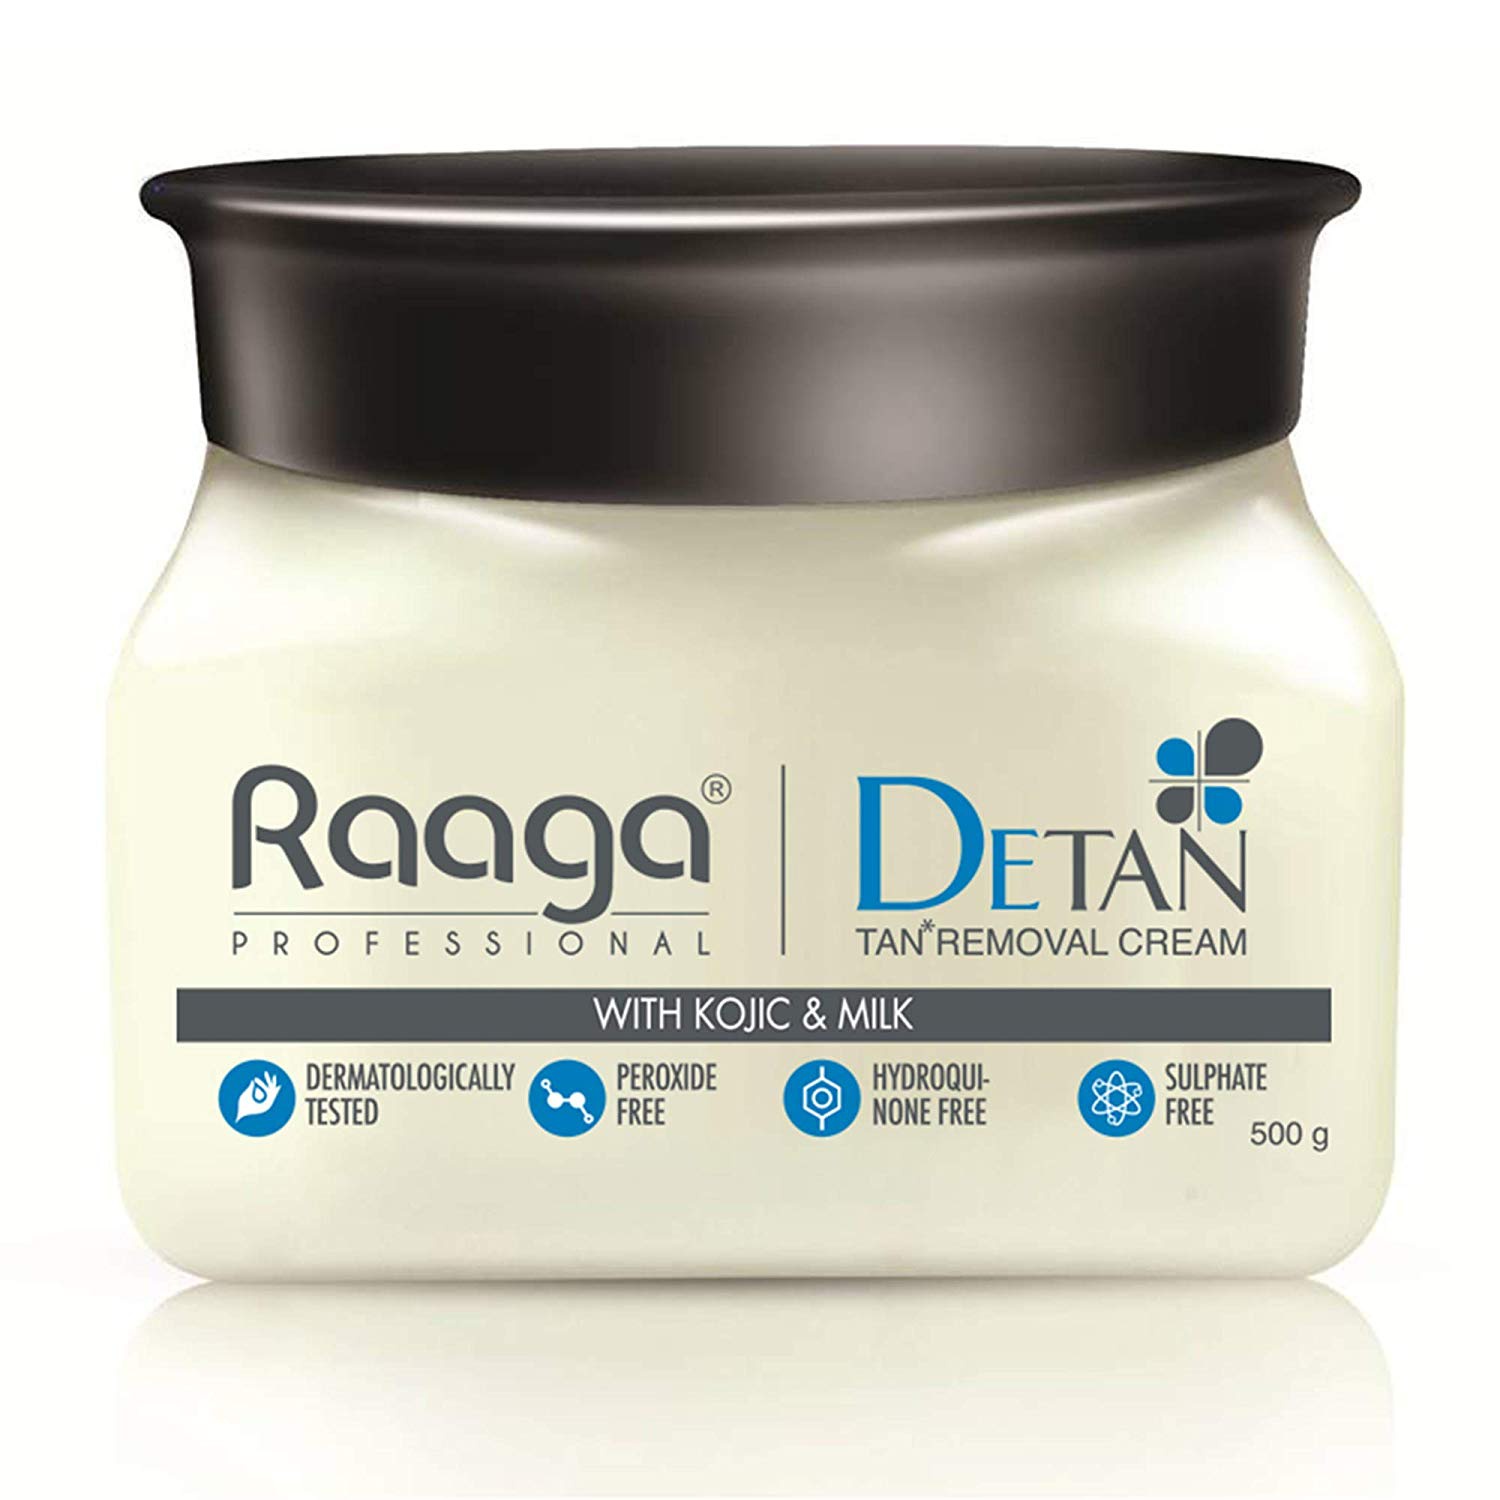 Raaga Detan tan removal cream